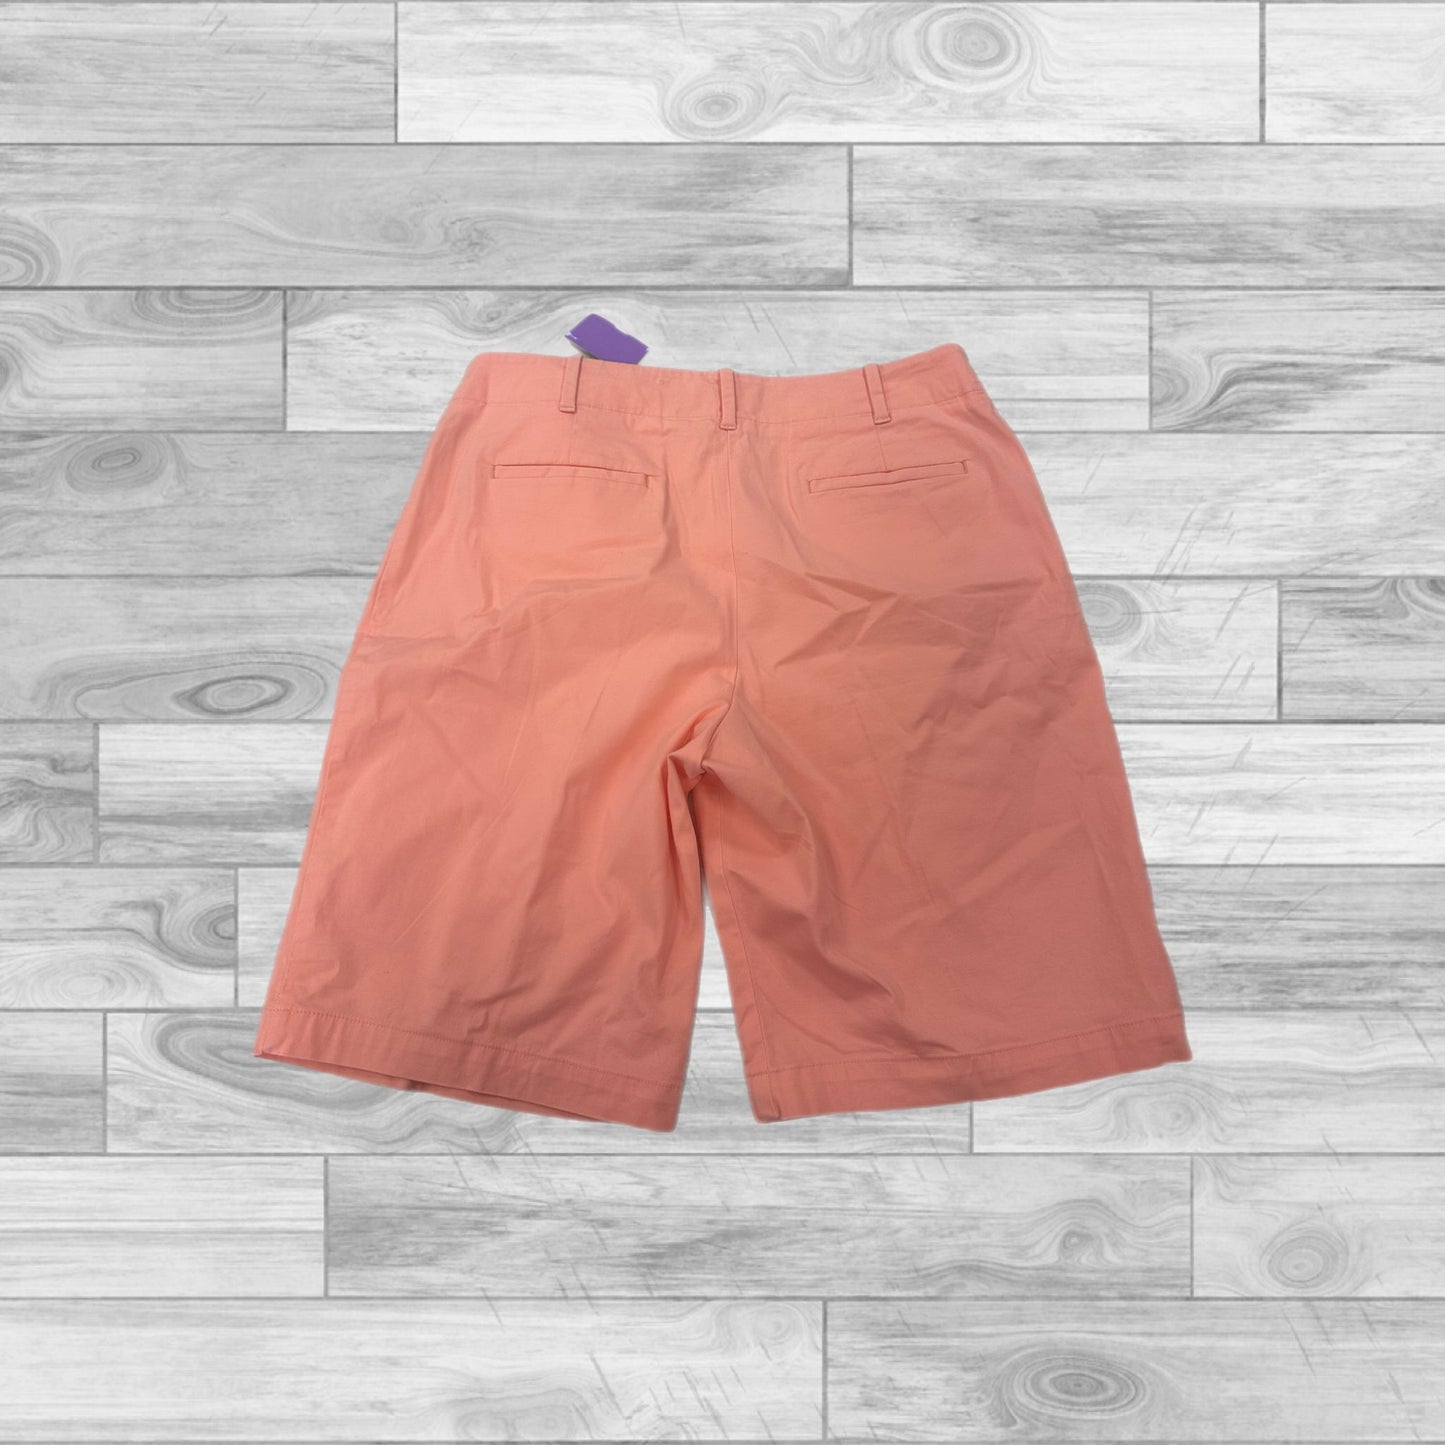 Coral Shorts Talbots, Size 10petite